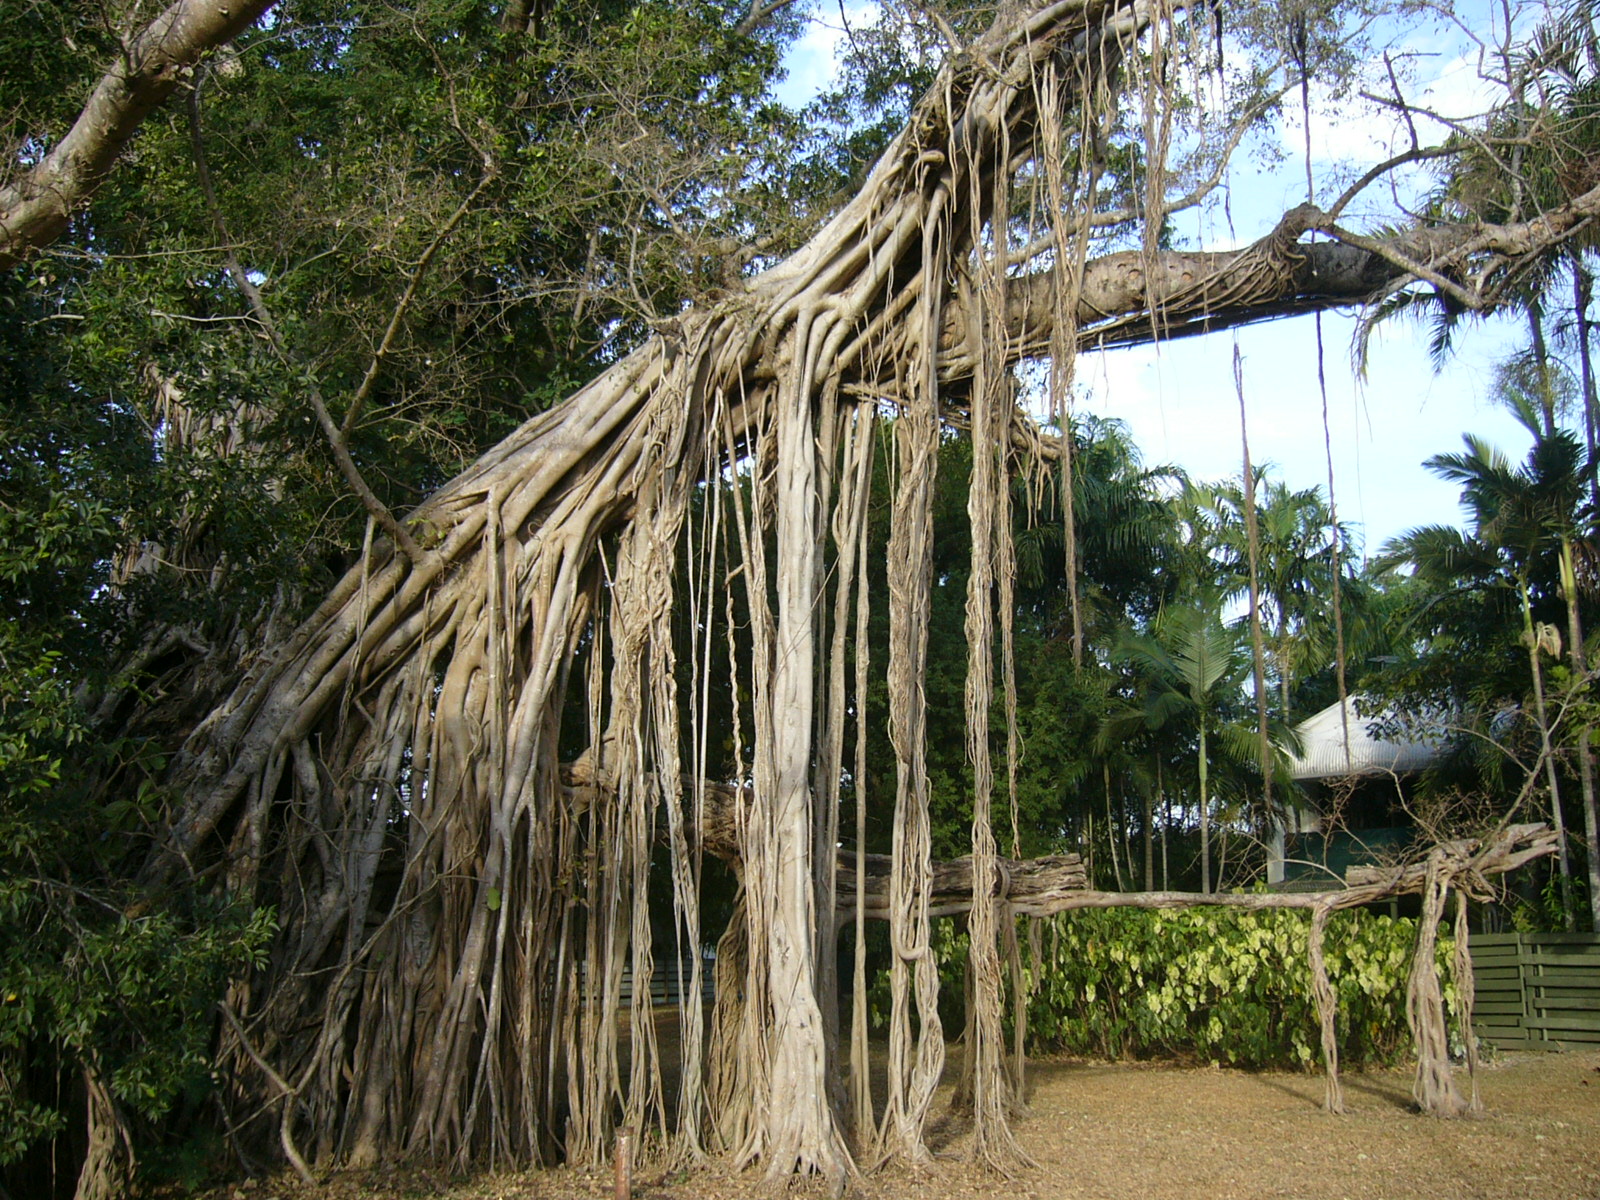 Banyan trees